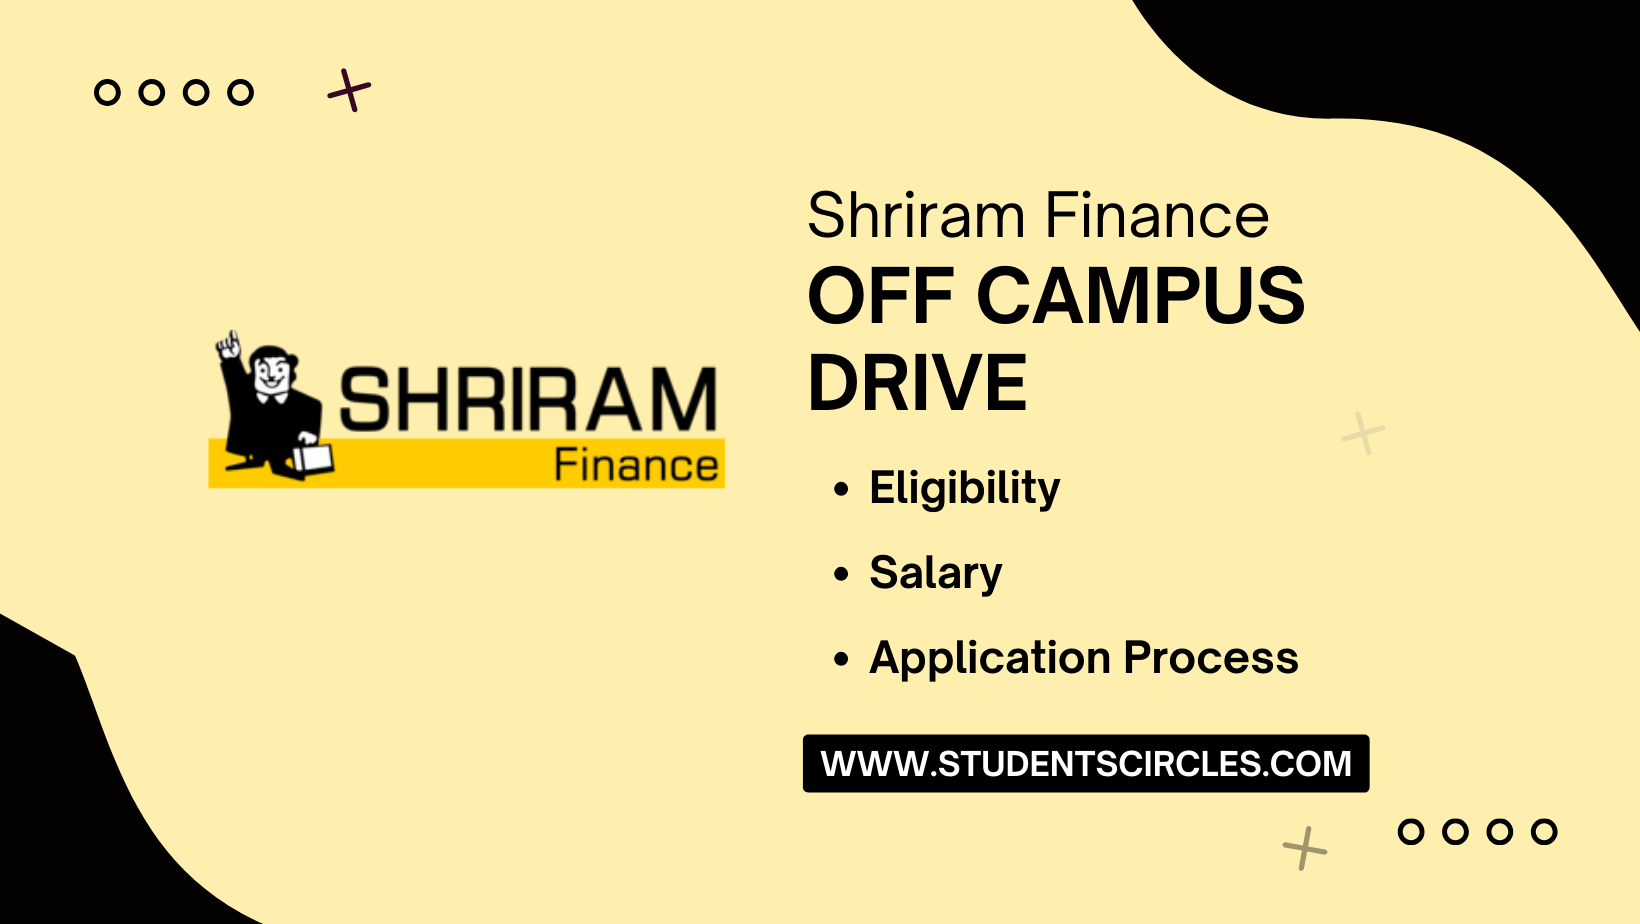 Shriram Finance Off Campus Drive